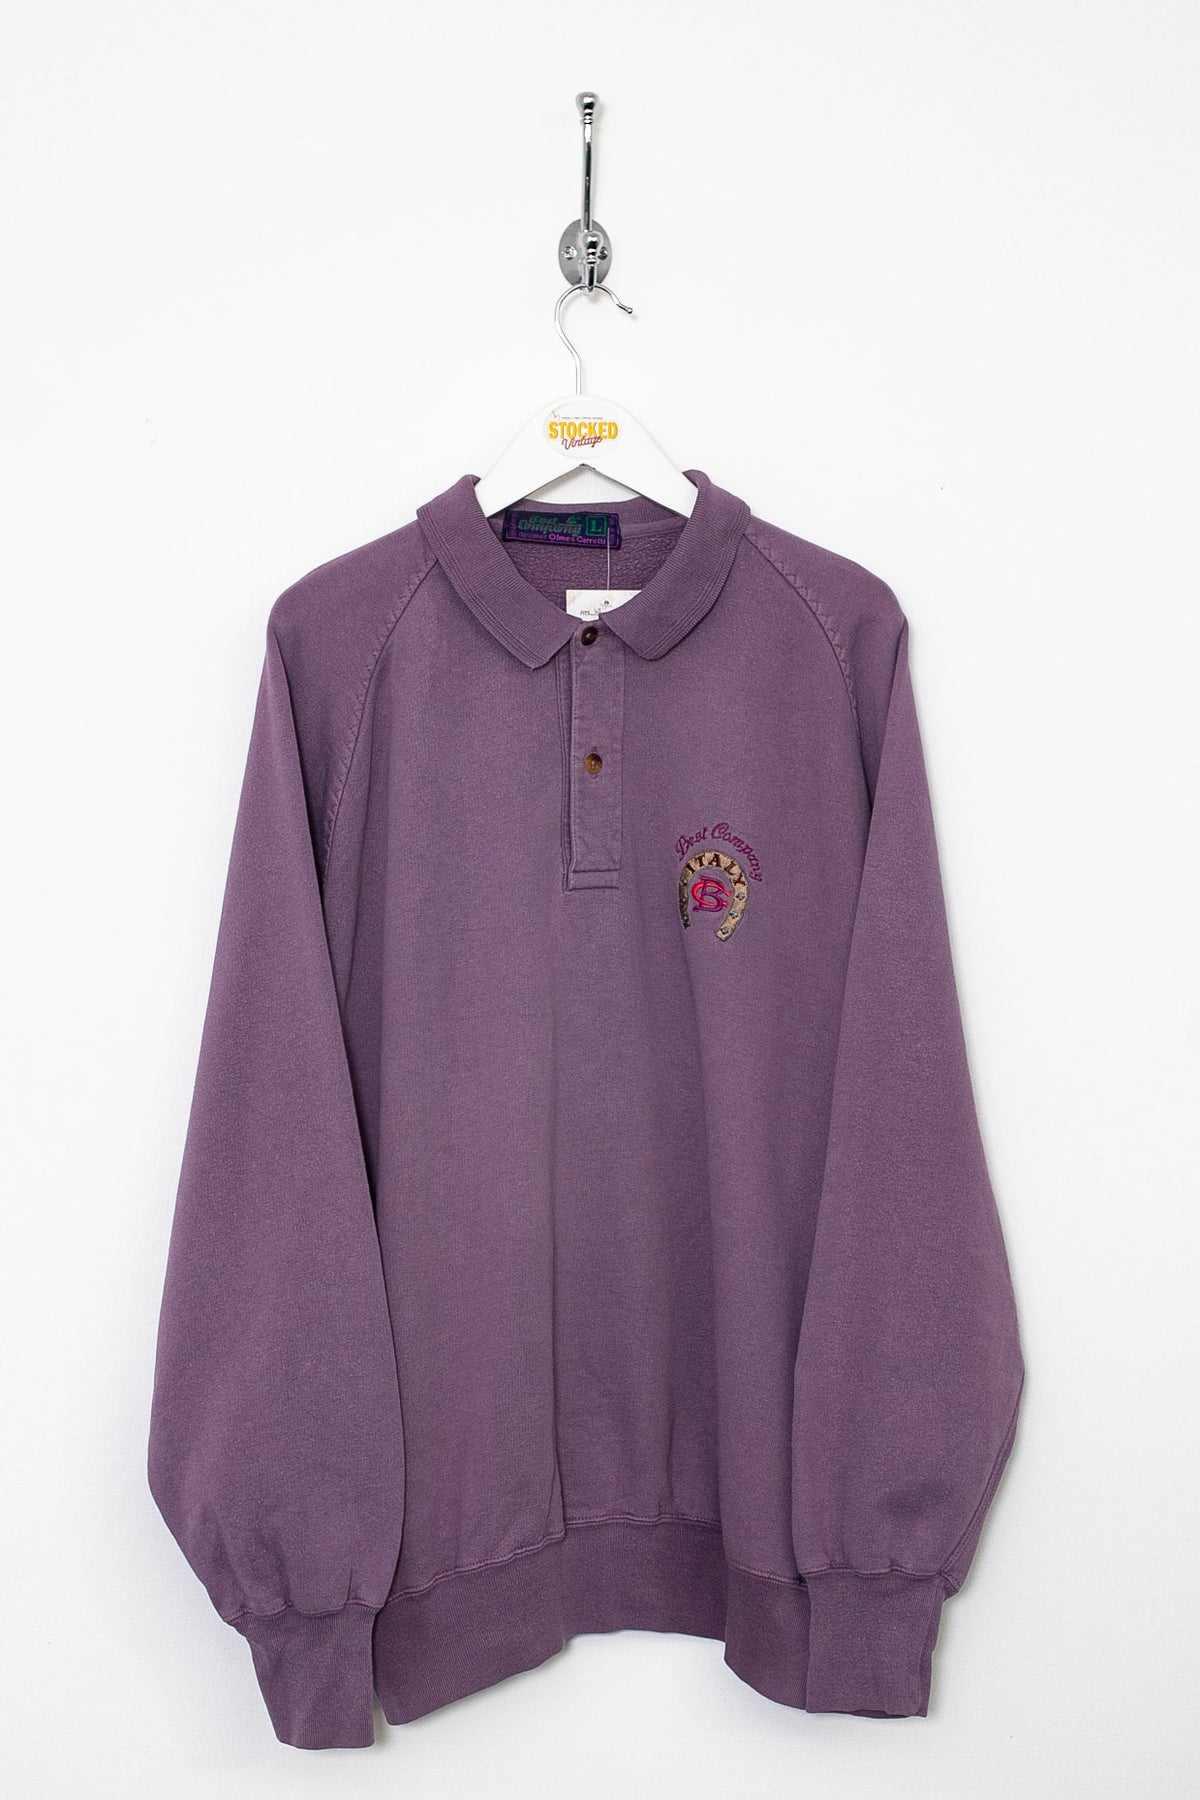 90s Best Company Sweatshirt (L)